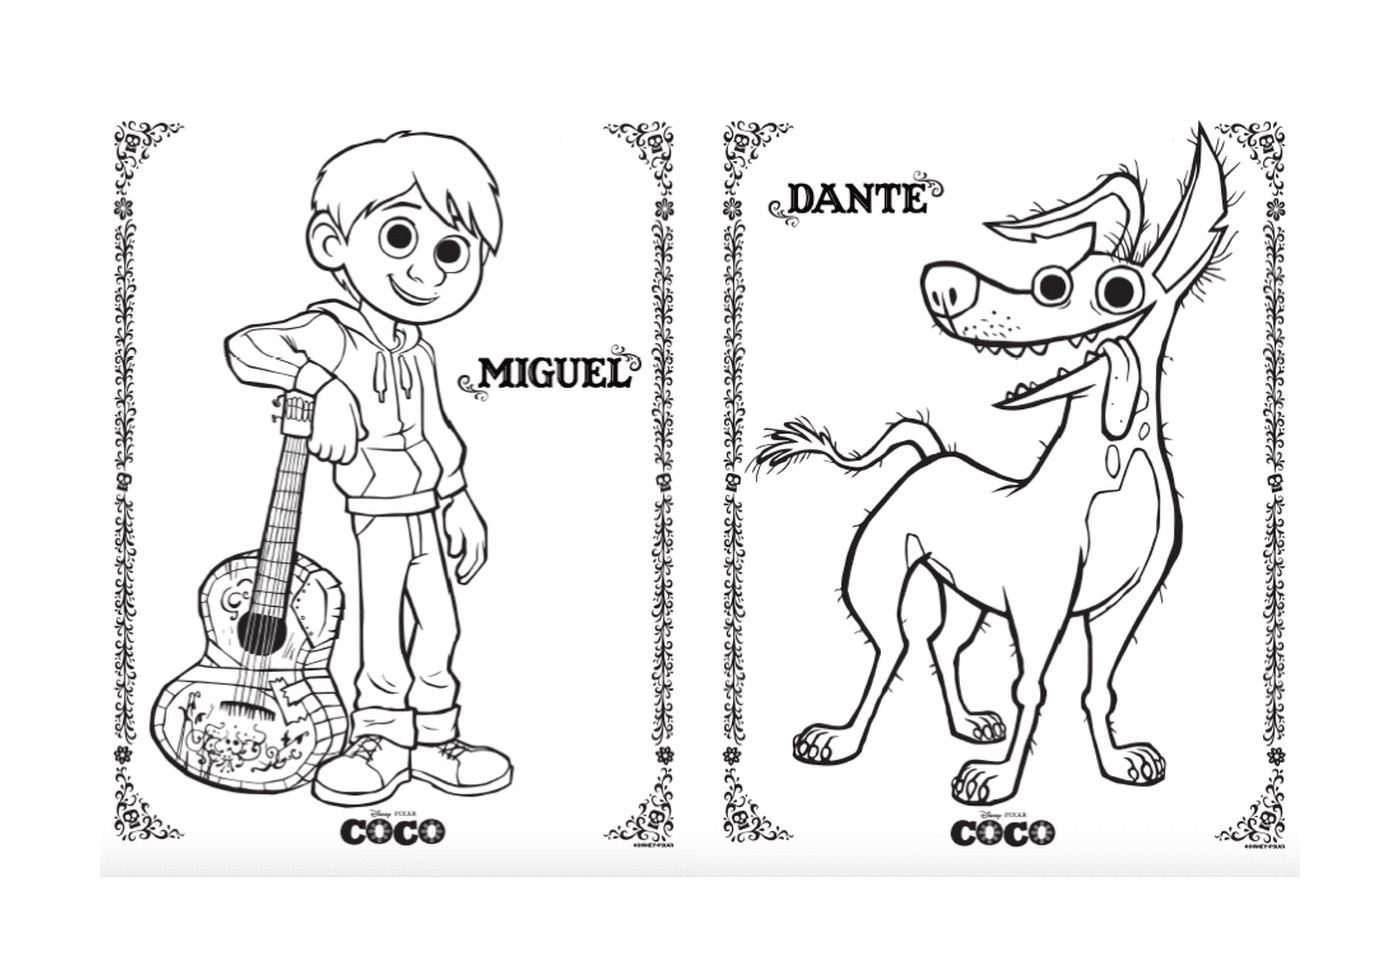  Miguel and Dante the Dog, in Disney Coco Pixar 